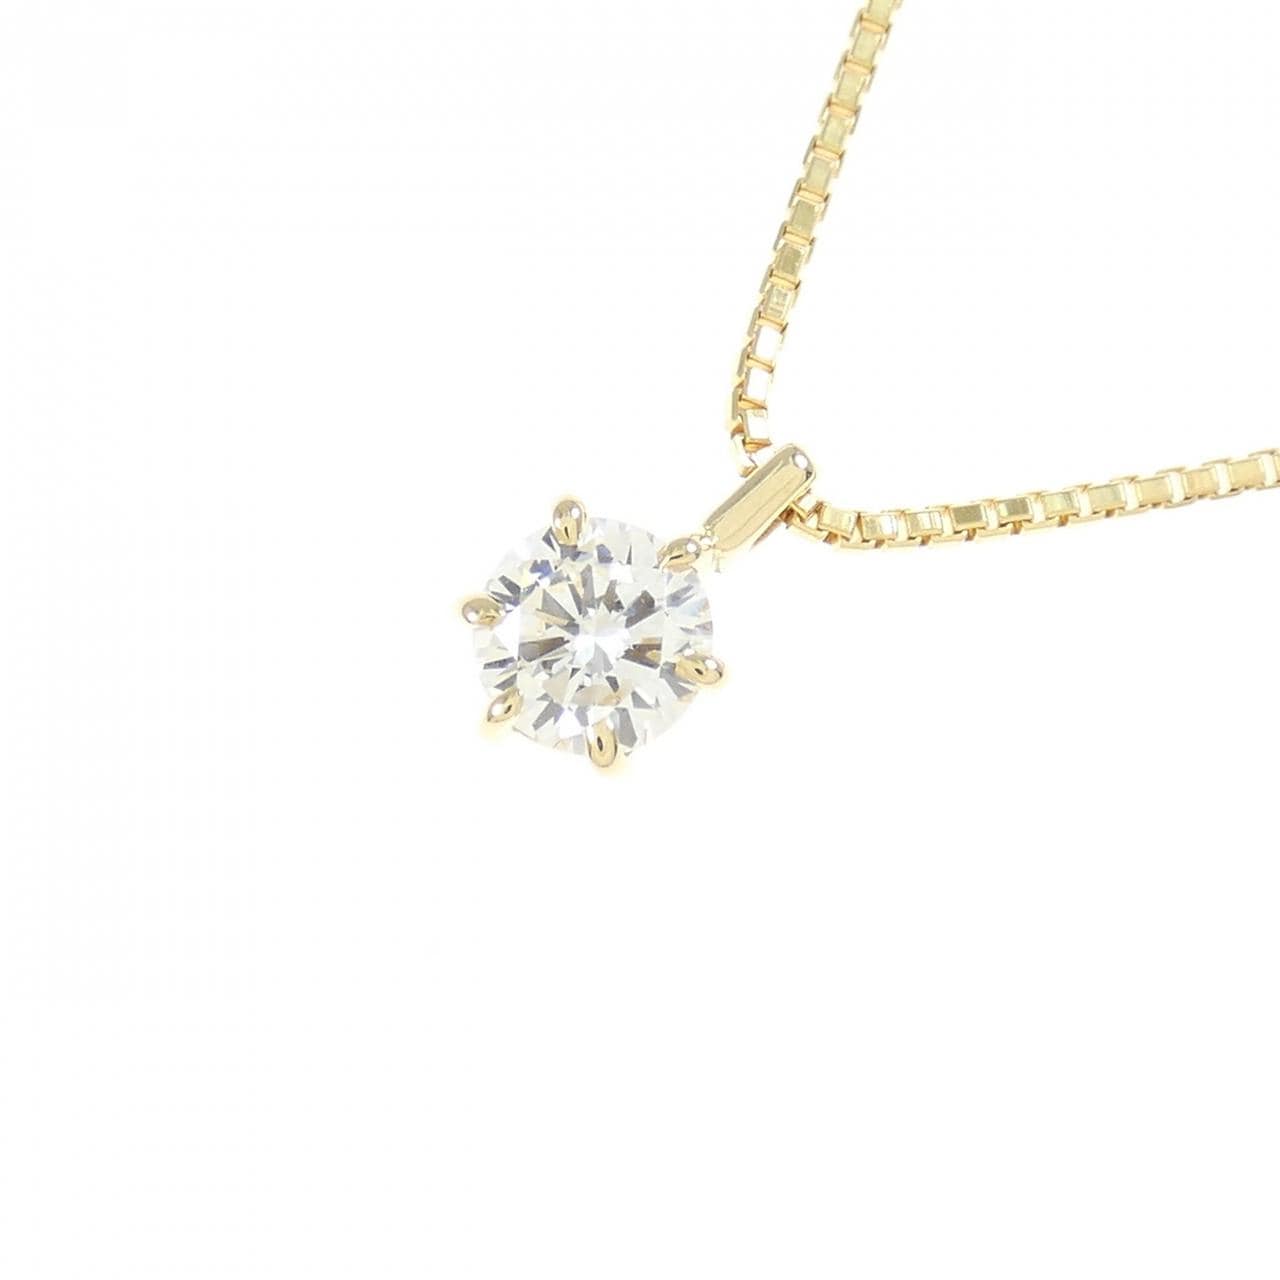 K18YG Diamond Necklace 0.447CT G VS1 Good